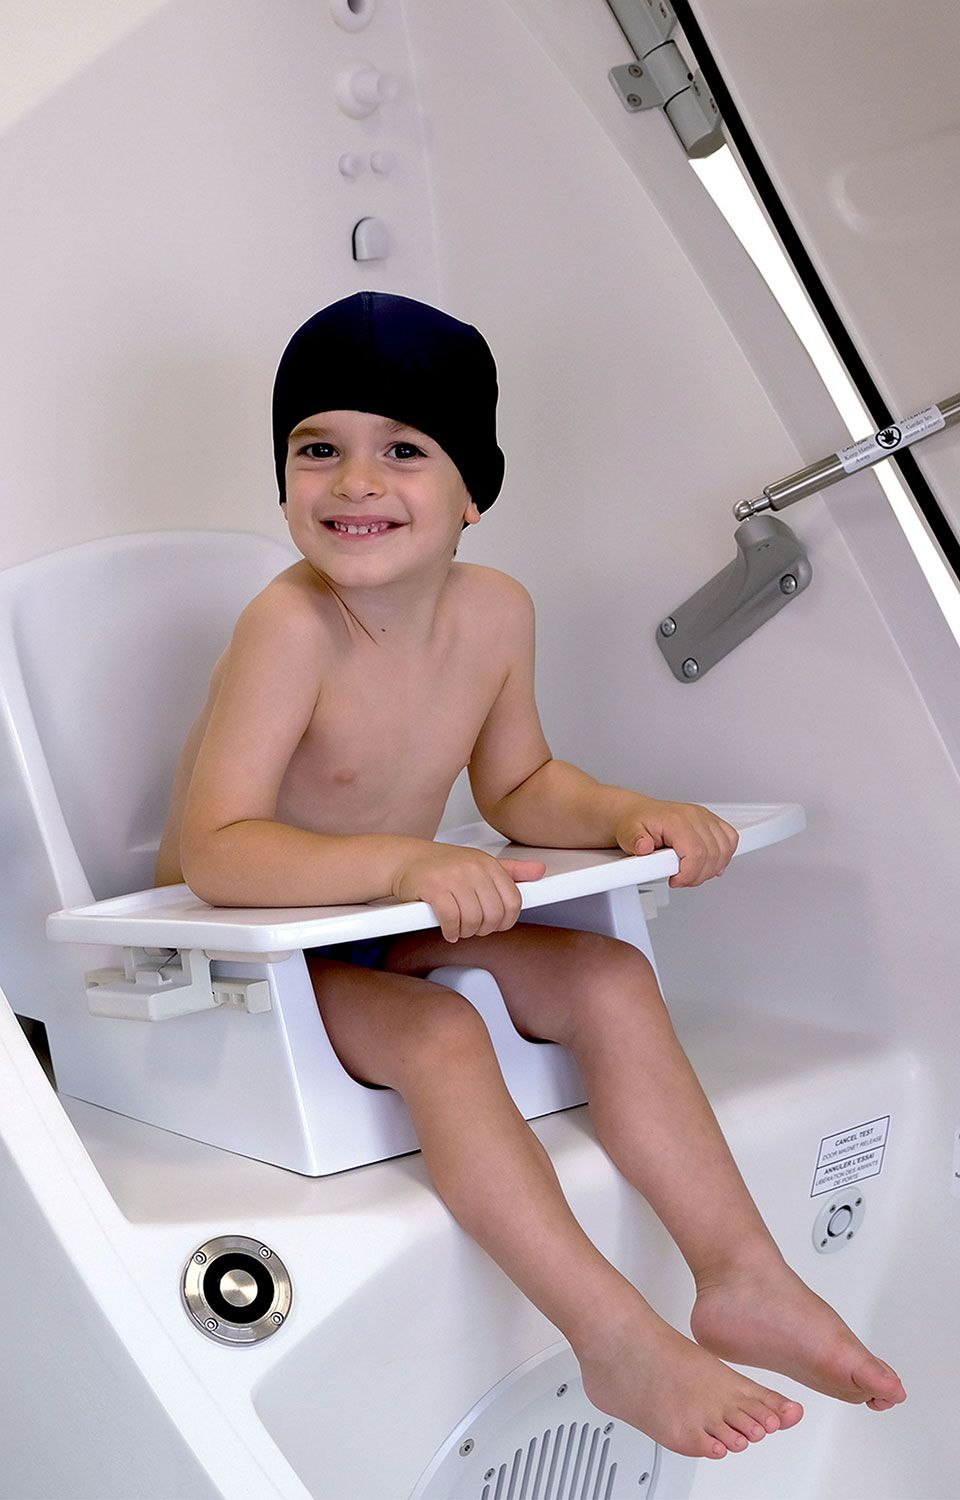 BOD POD GS-X - Boy sitting on Pediatric Option Module